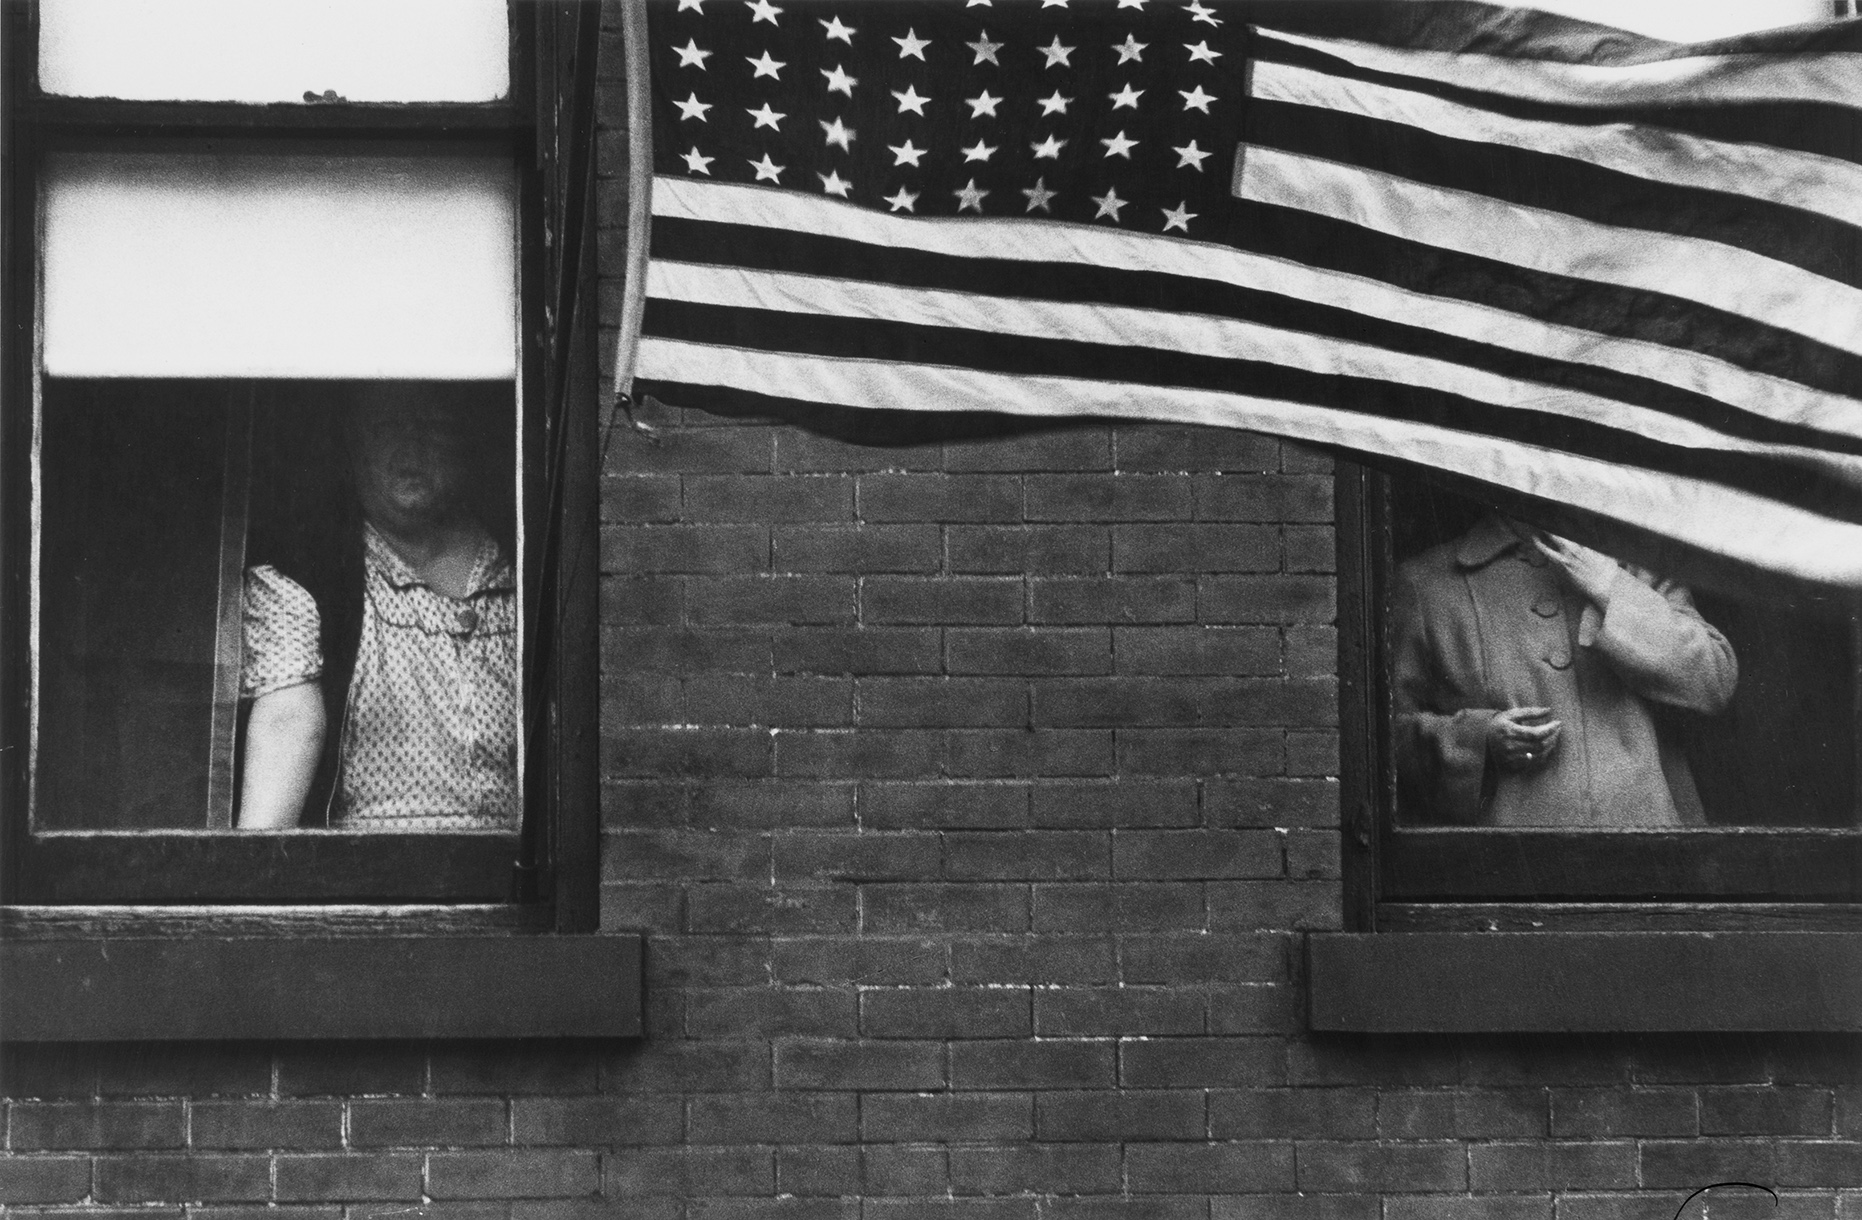 Parade, Hoboken, New Jersey, 1955, Robert Frank "The Americans"